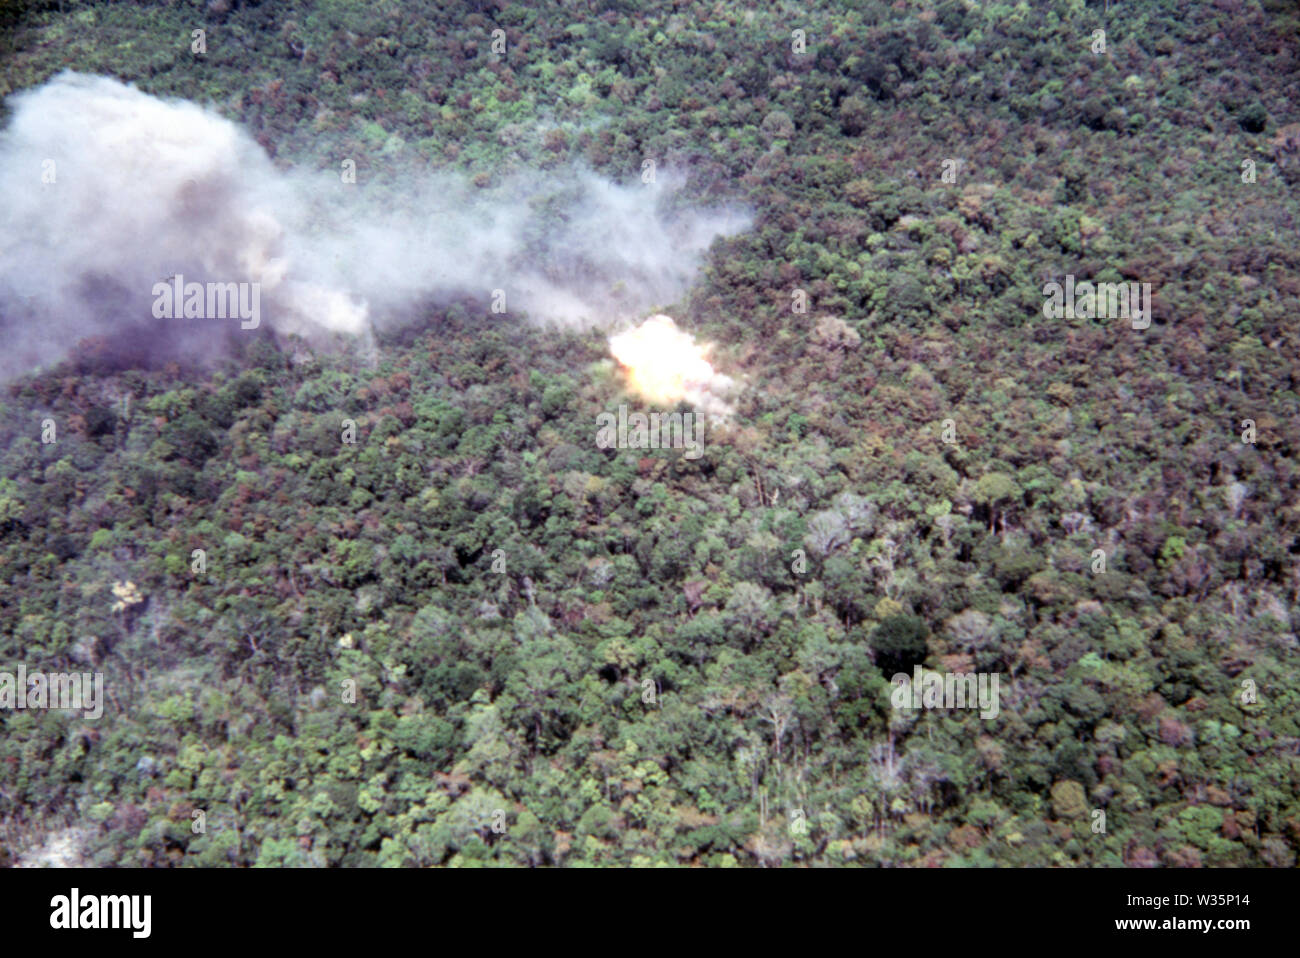 USA Vietnam-Krieg / Vietnam War - Luftangriff / Air Strike (1966 / 1968) Stock Photo